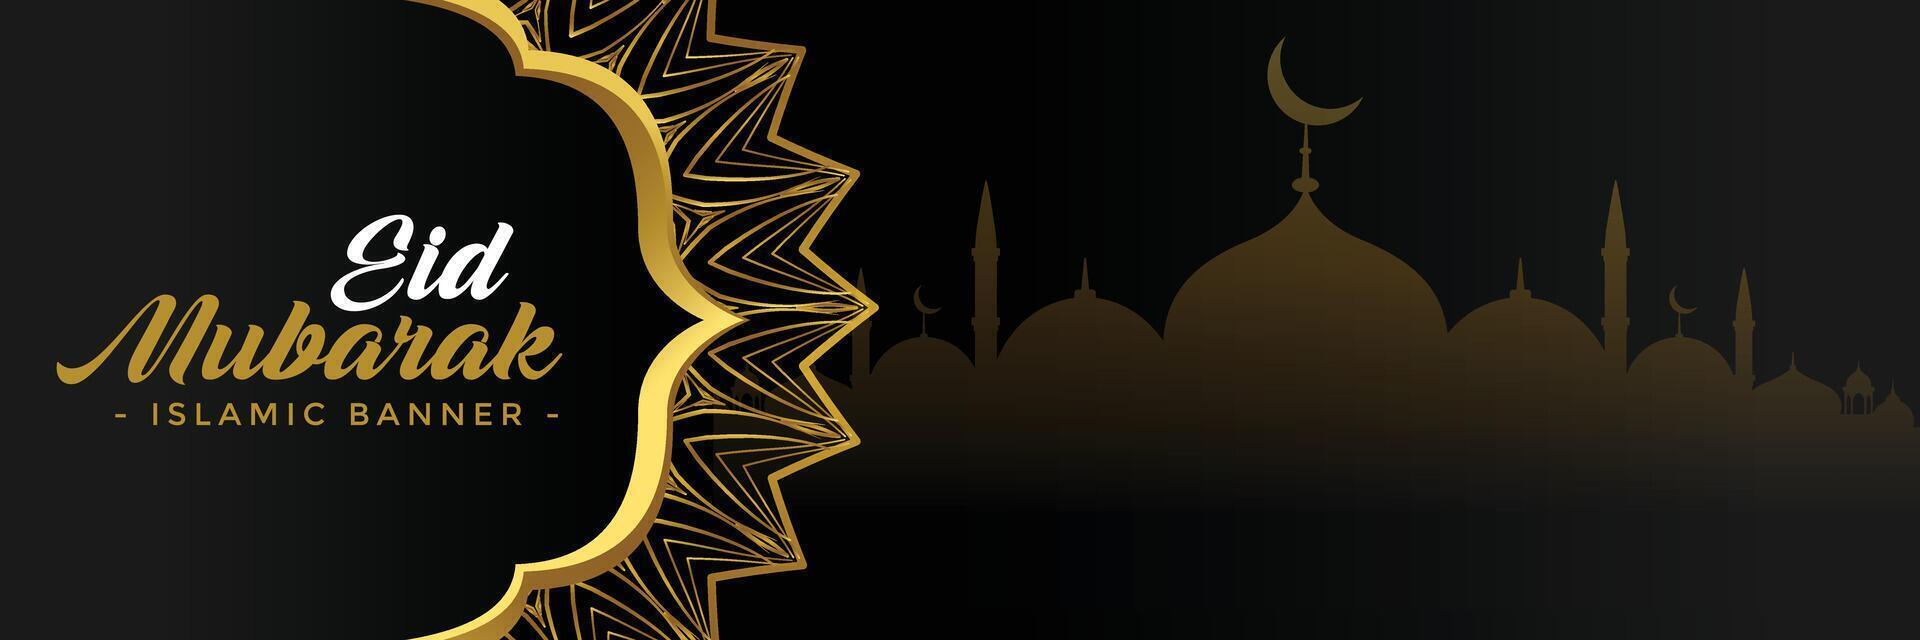 eid festival golden decorative banner design vector